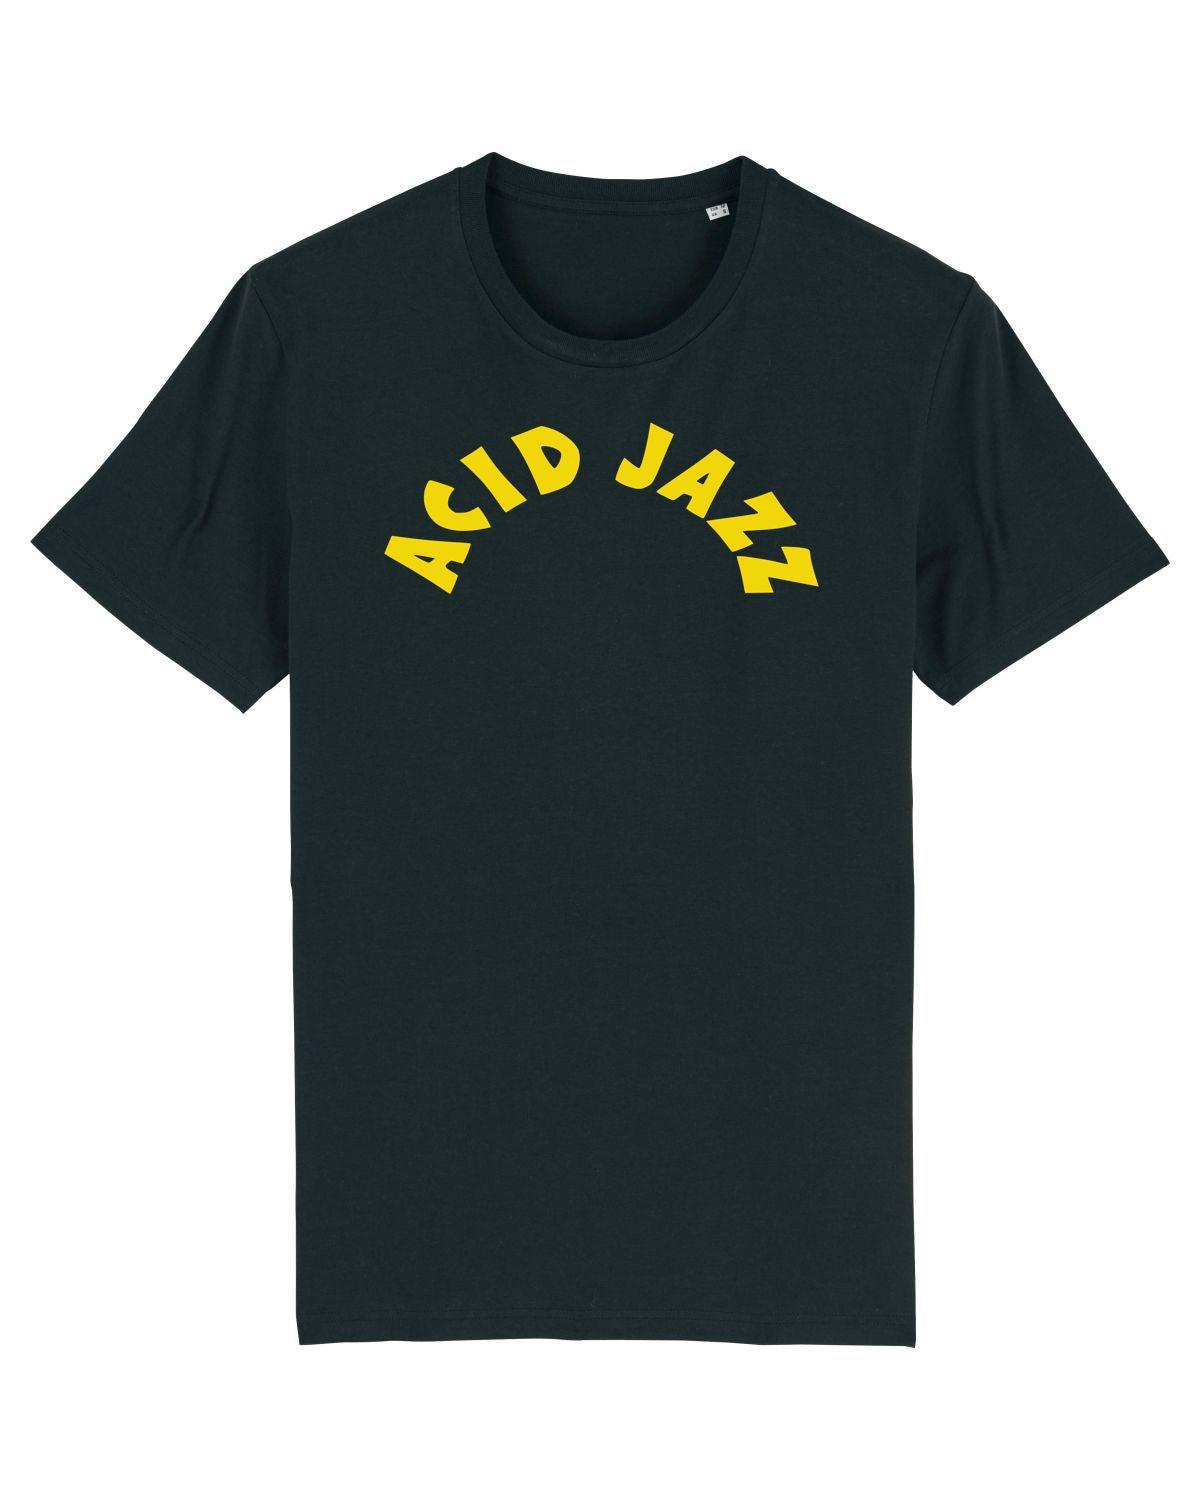 ACID JAZZ: College T-Shirt Official Merchandise of Acid Jazz Records (3 Colour Options) - SOUND IS COLOUR